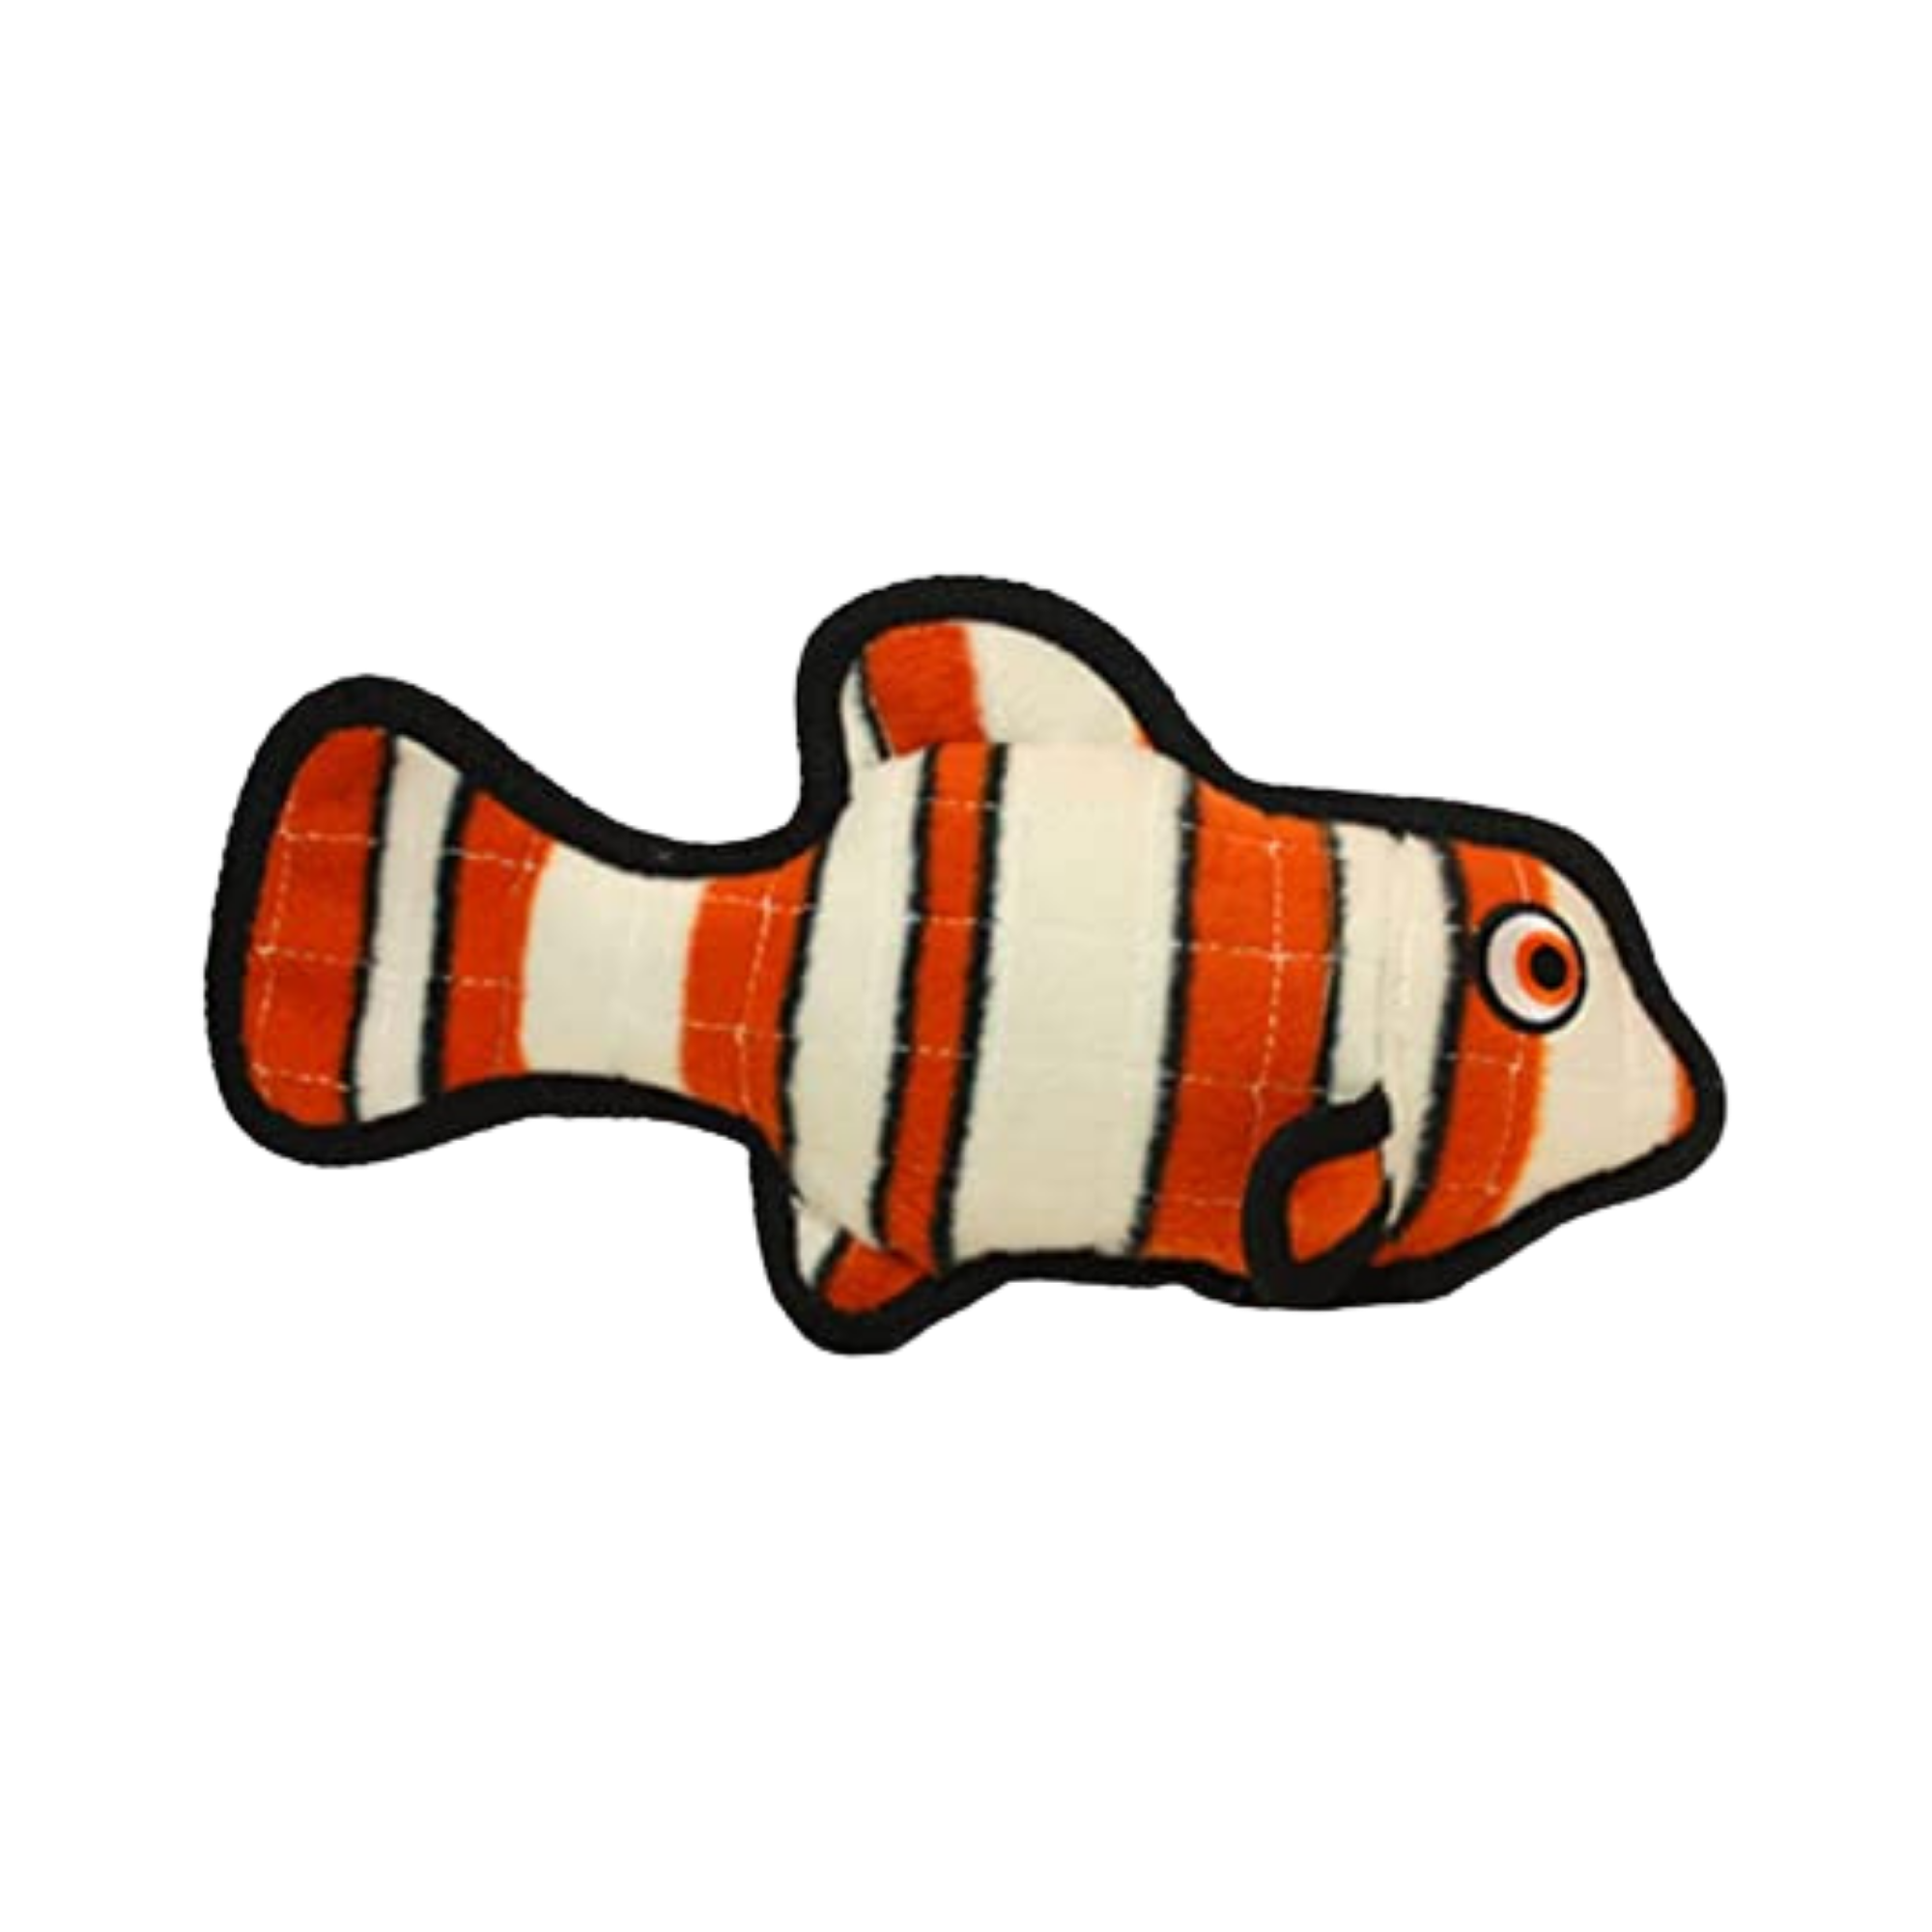 VIP Tuffy's Ocean Creature Jr Fish Dog Toy Orange - Mutts & Co.